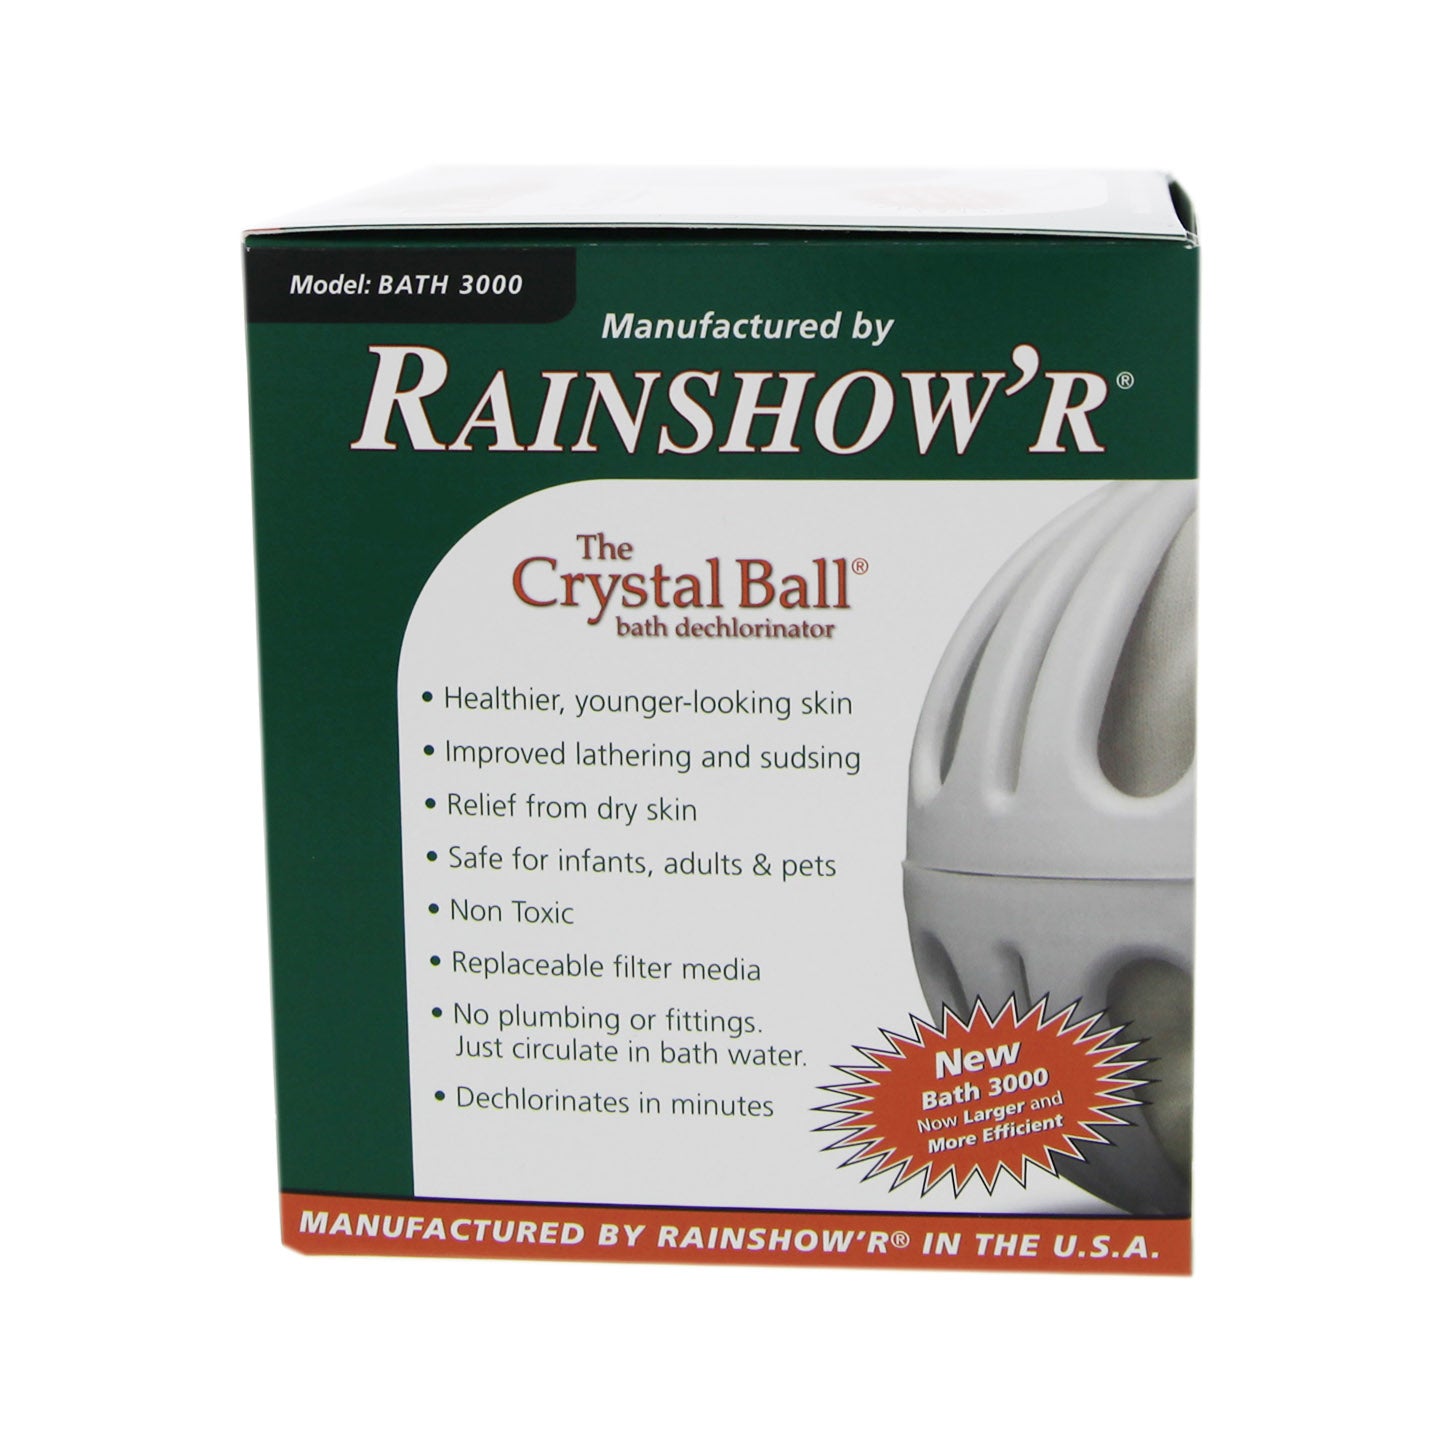 Rainshower Bath-3000 KDF Quartz Crystal Bath Water Filter Ball